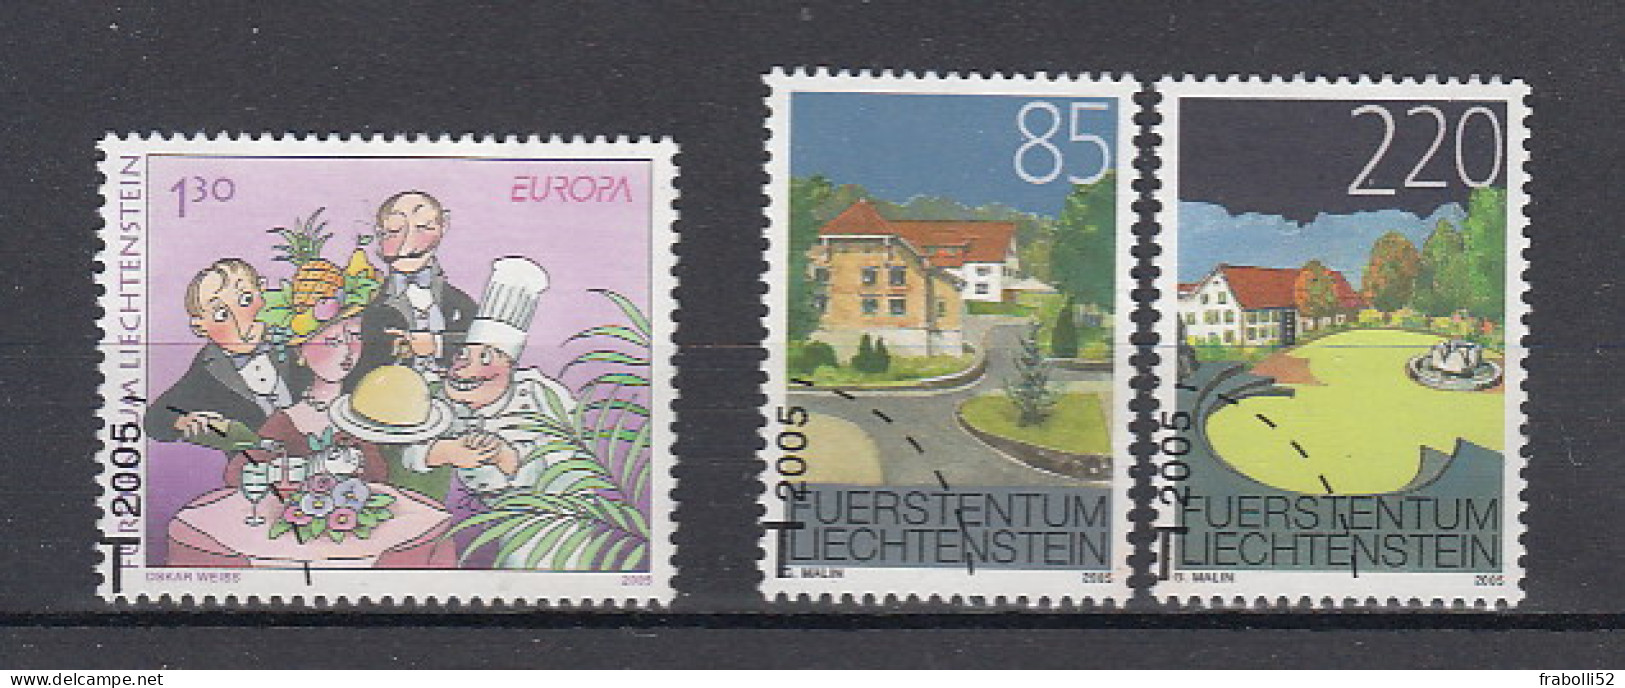 Liechtenstein Usati:  N. 1309 E 1328-9  Lusso - Oblitérés